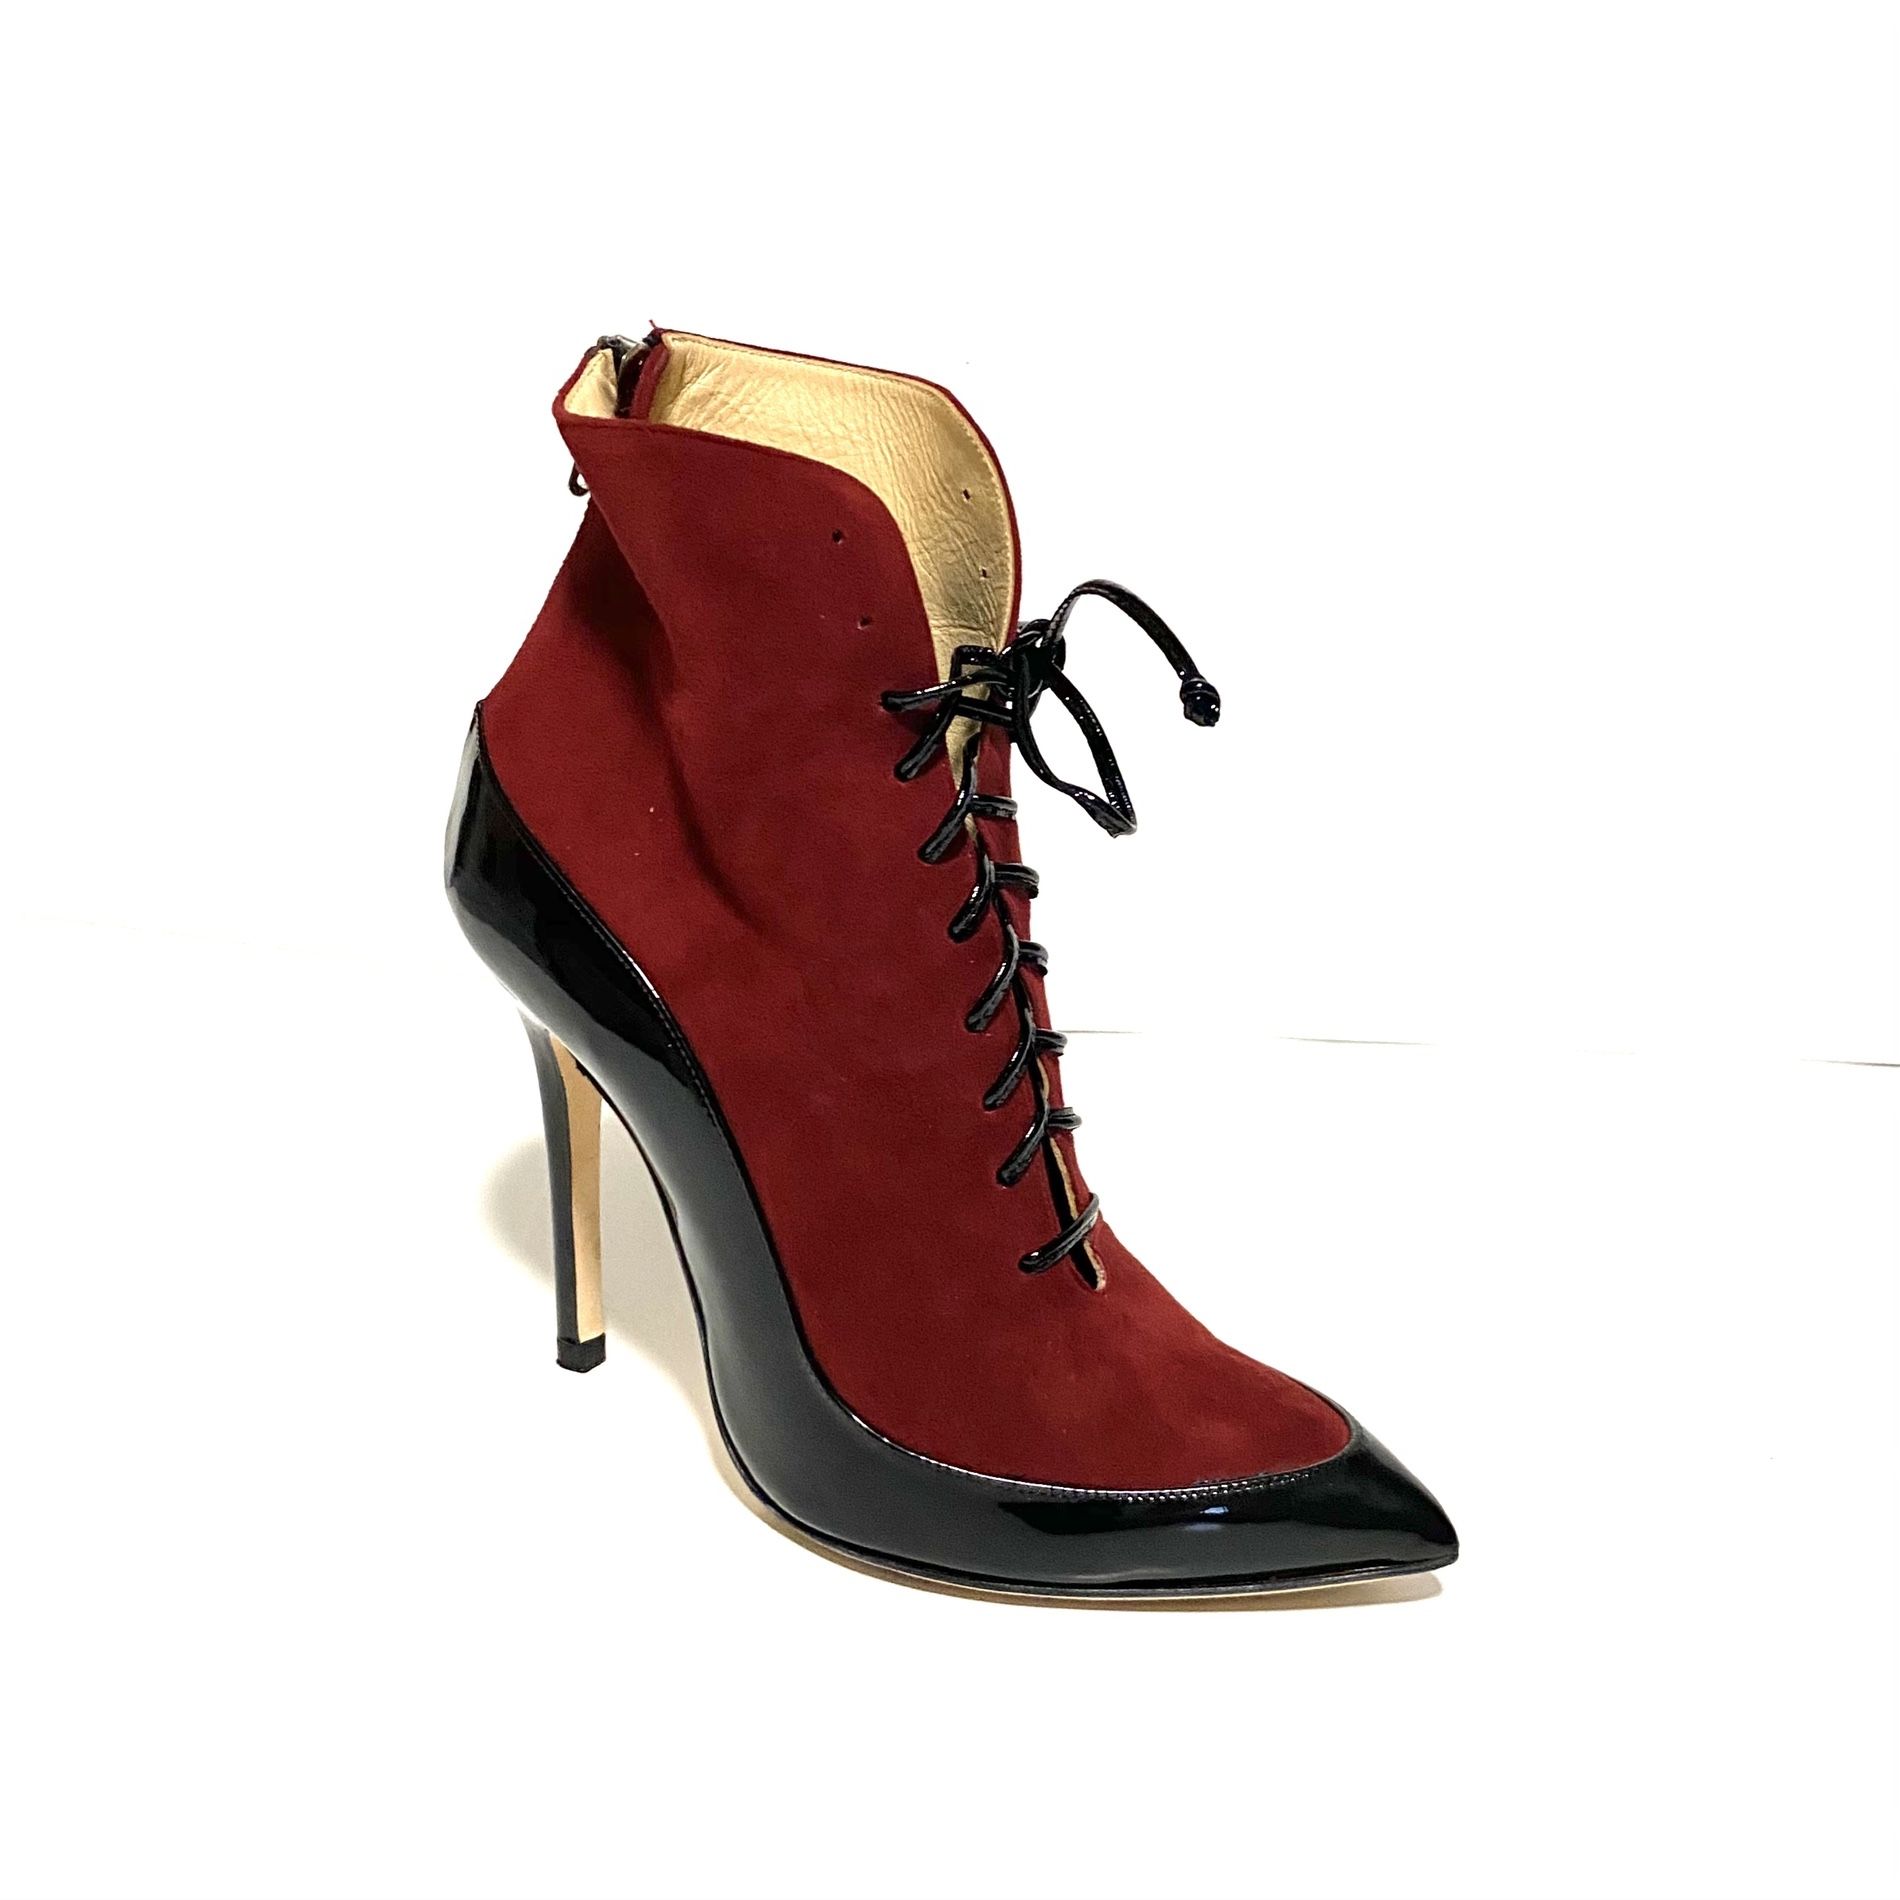 Carmen Marc Valvo Calzature Stiletto Boots . Size 35